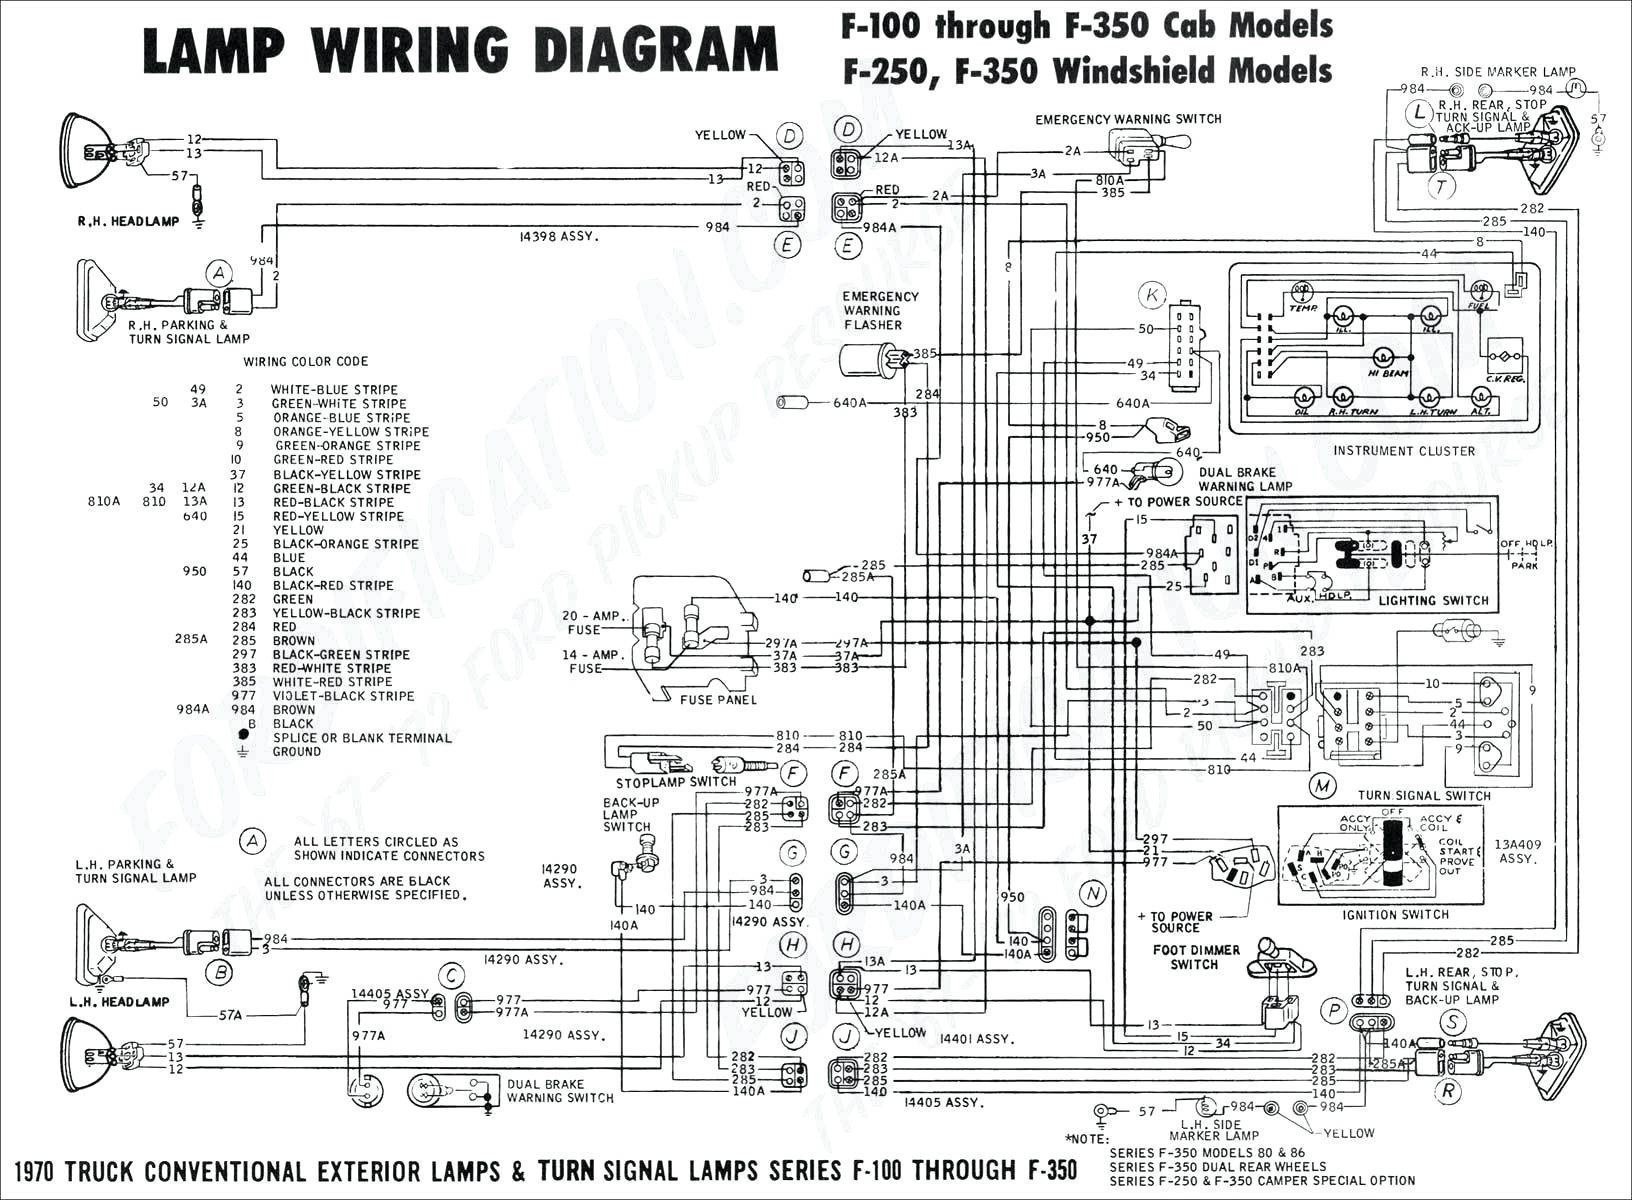 2007 international 4300 wiring diagram new international truck wiring diagram besides international truck fuse of 2007 international 4300 wiring diagram